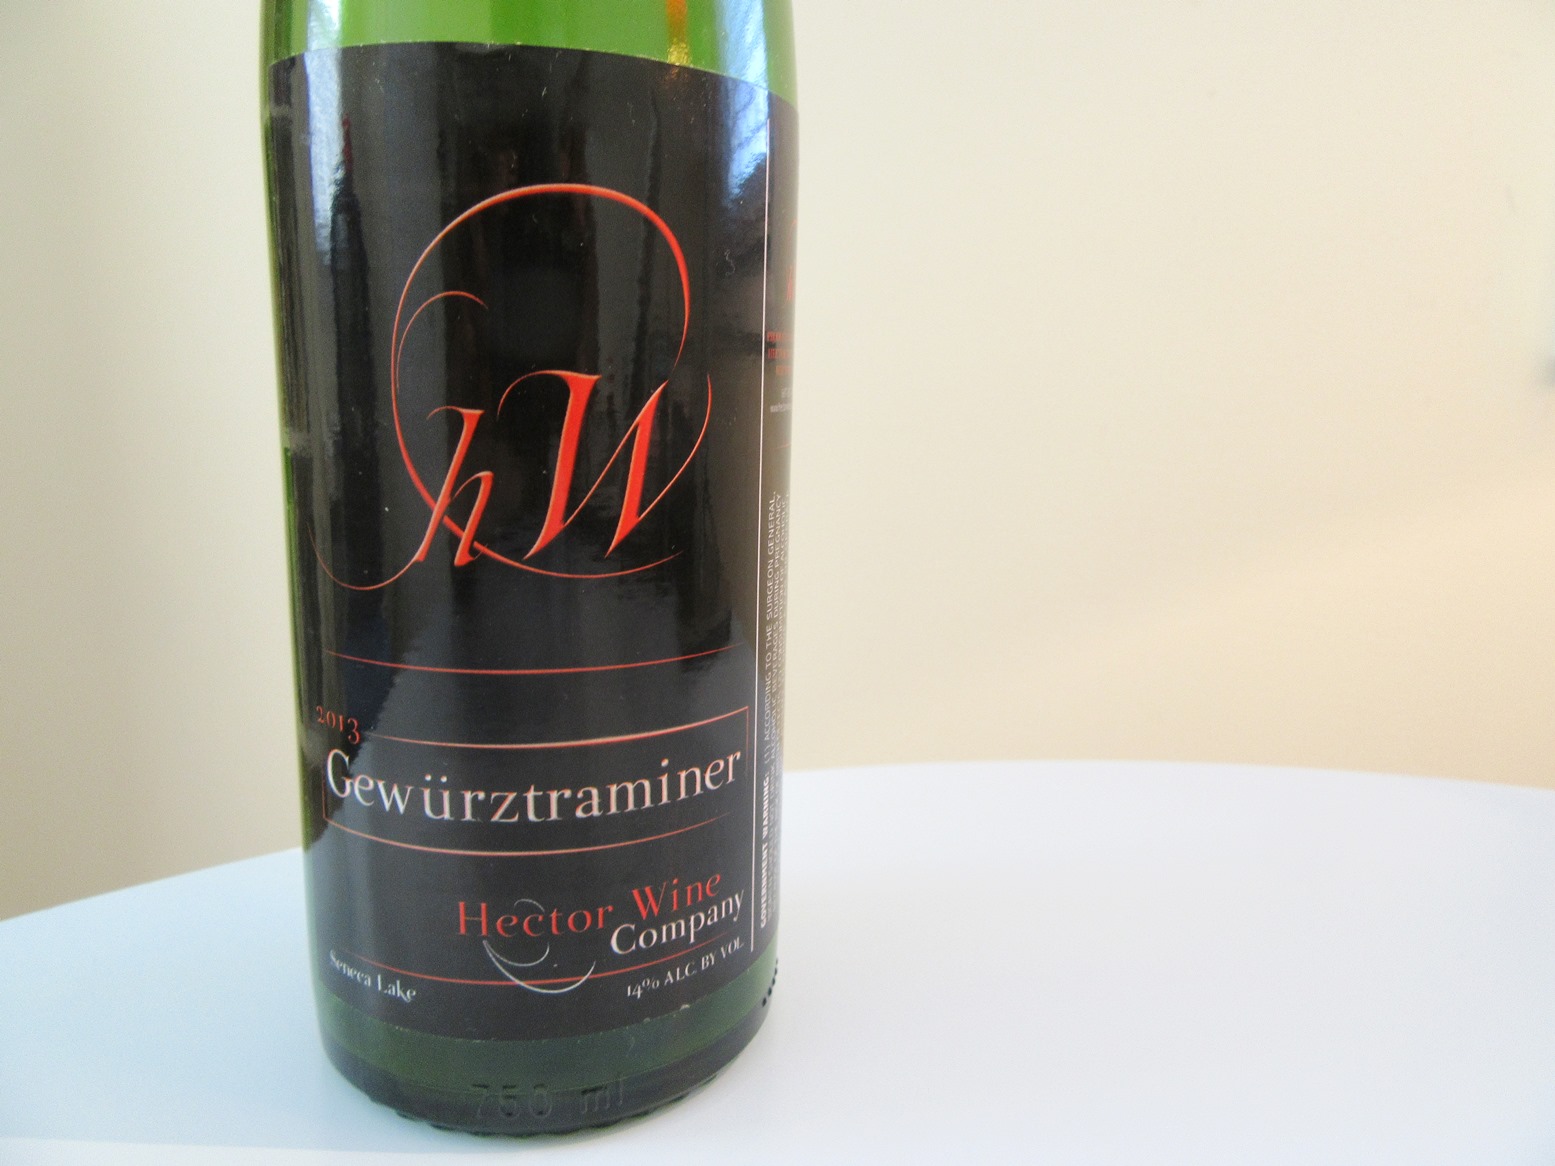 Hector Wine Company, Gewürztraminer 2013, Seneca Lake, New York, Wine Casual